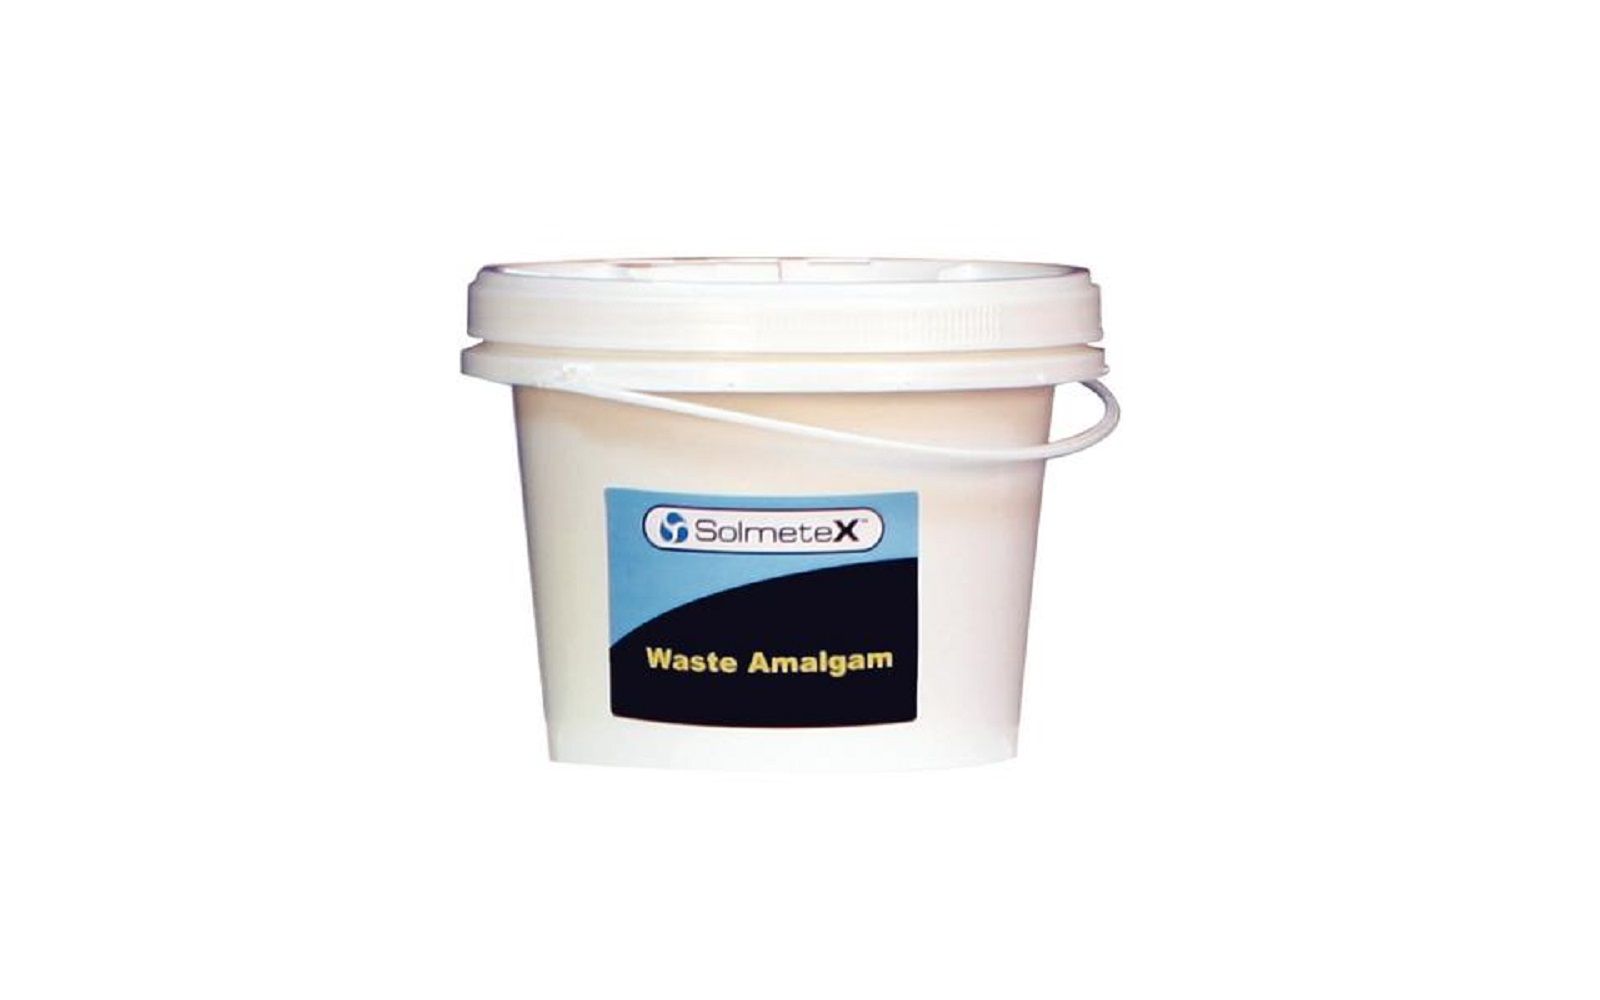 Amalgam recovery waste compliance - solmetex